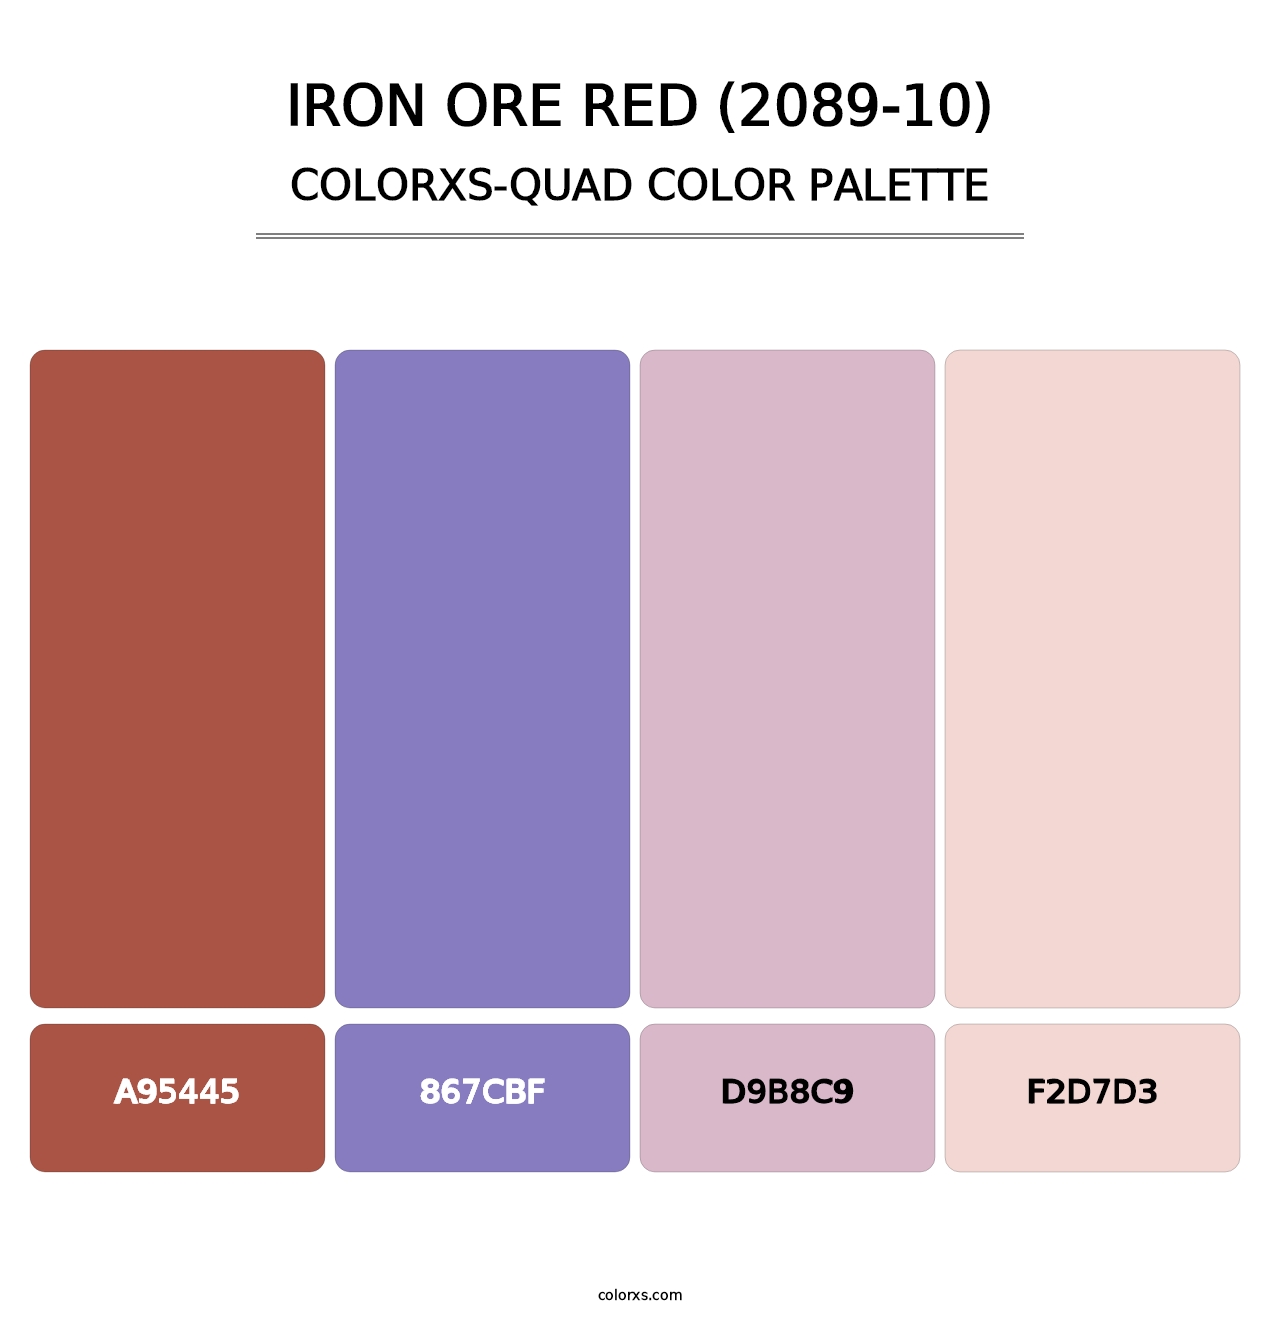 Iron Ore Red (2089-10) - Colorxs Quad Palette